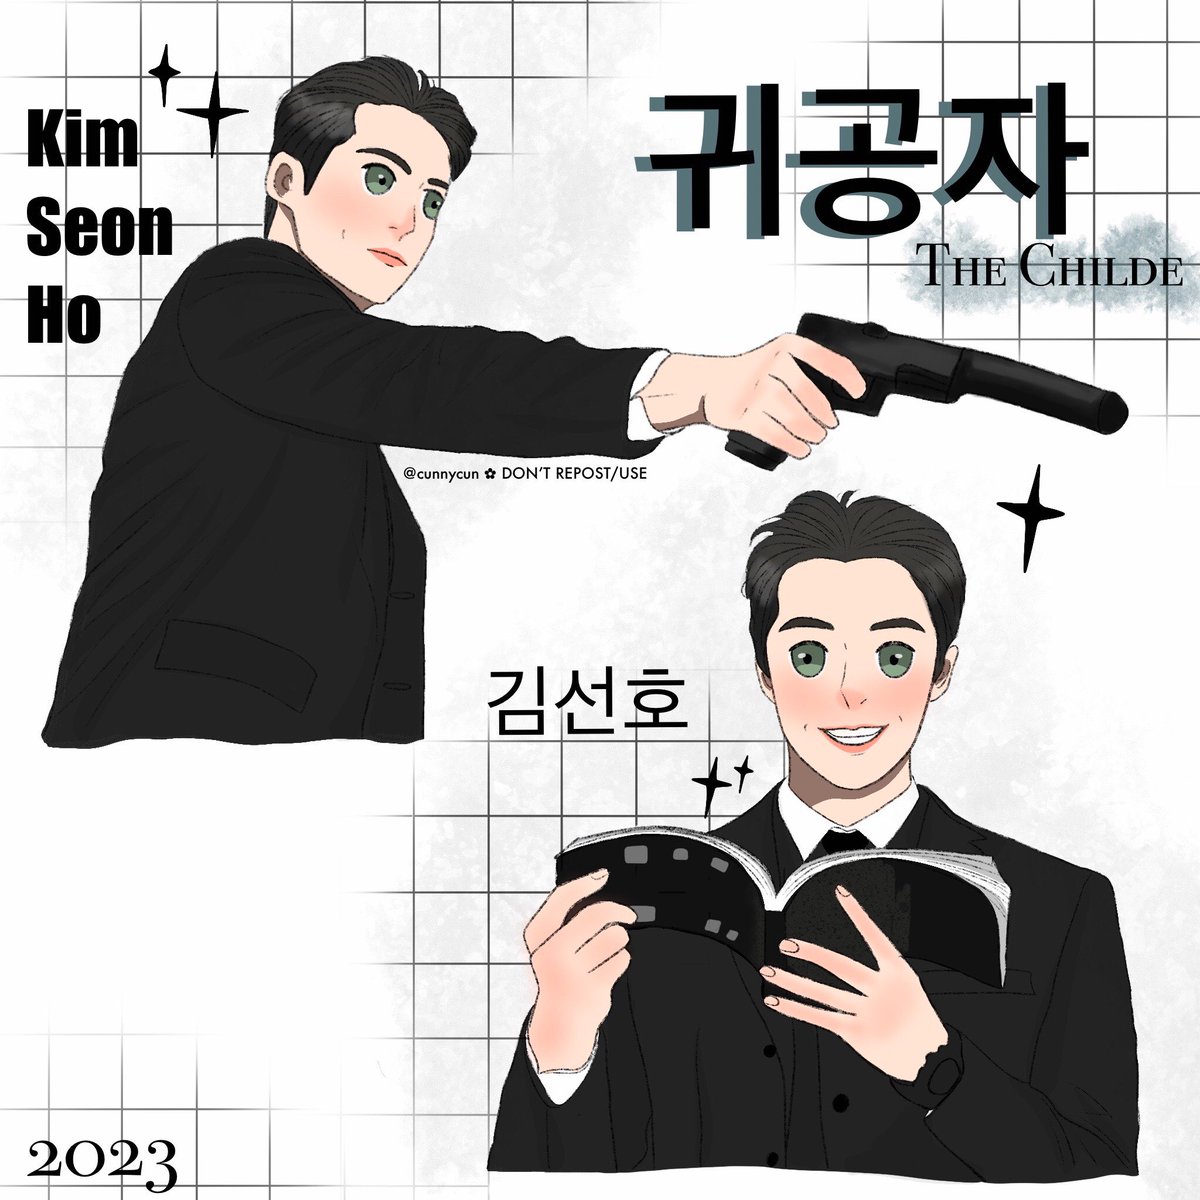 my fanart for #kimseonho in his new film project #thechild @kimseonho_ina @KIMSEONHOGLOBAL @seonhojoy @SeonhokimIntl @shhdsbulletin @seonhohadaid